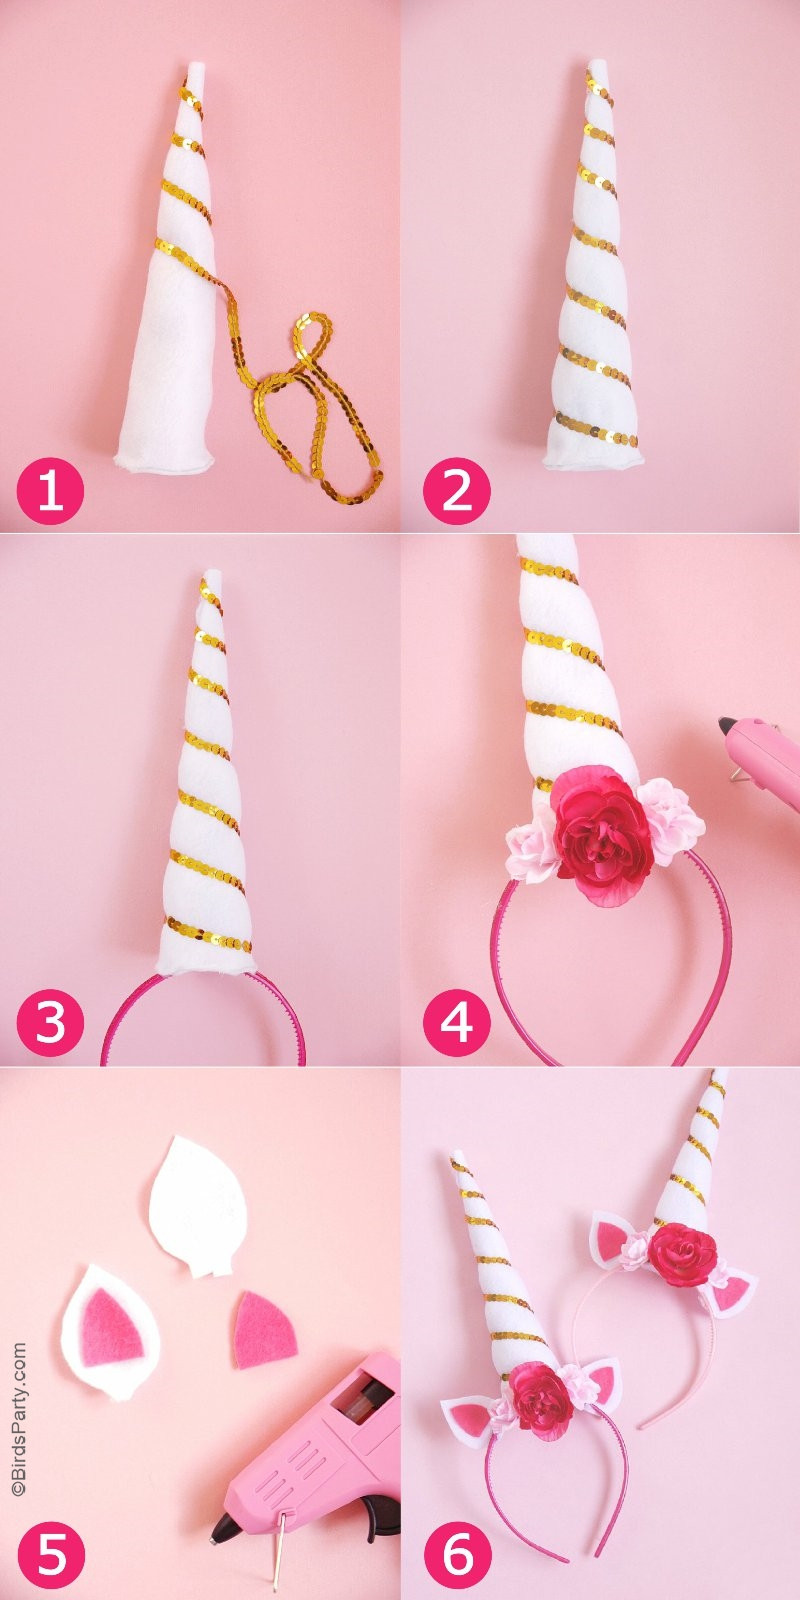 Best ideas about Unicorn Headband DIY
. Save or Pin DIY Unicorn Party Headbands Party Ideas Now.